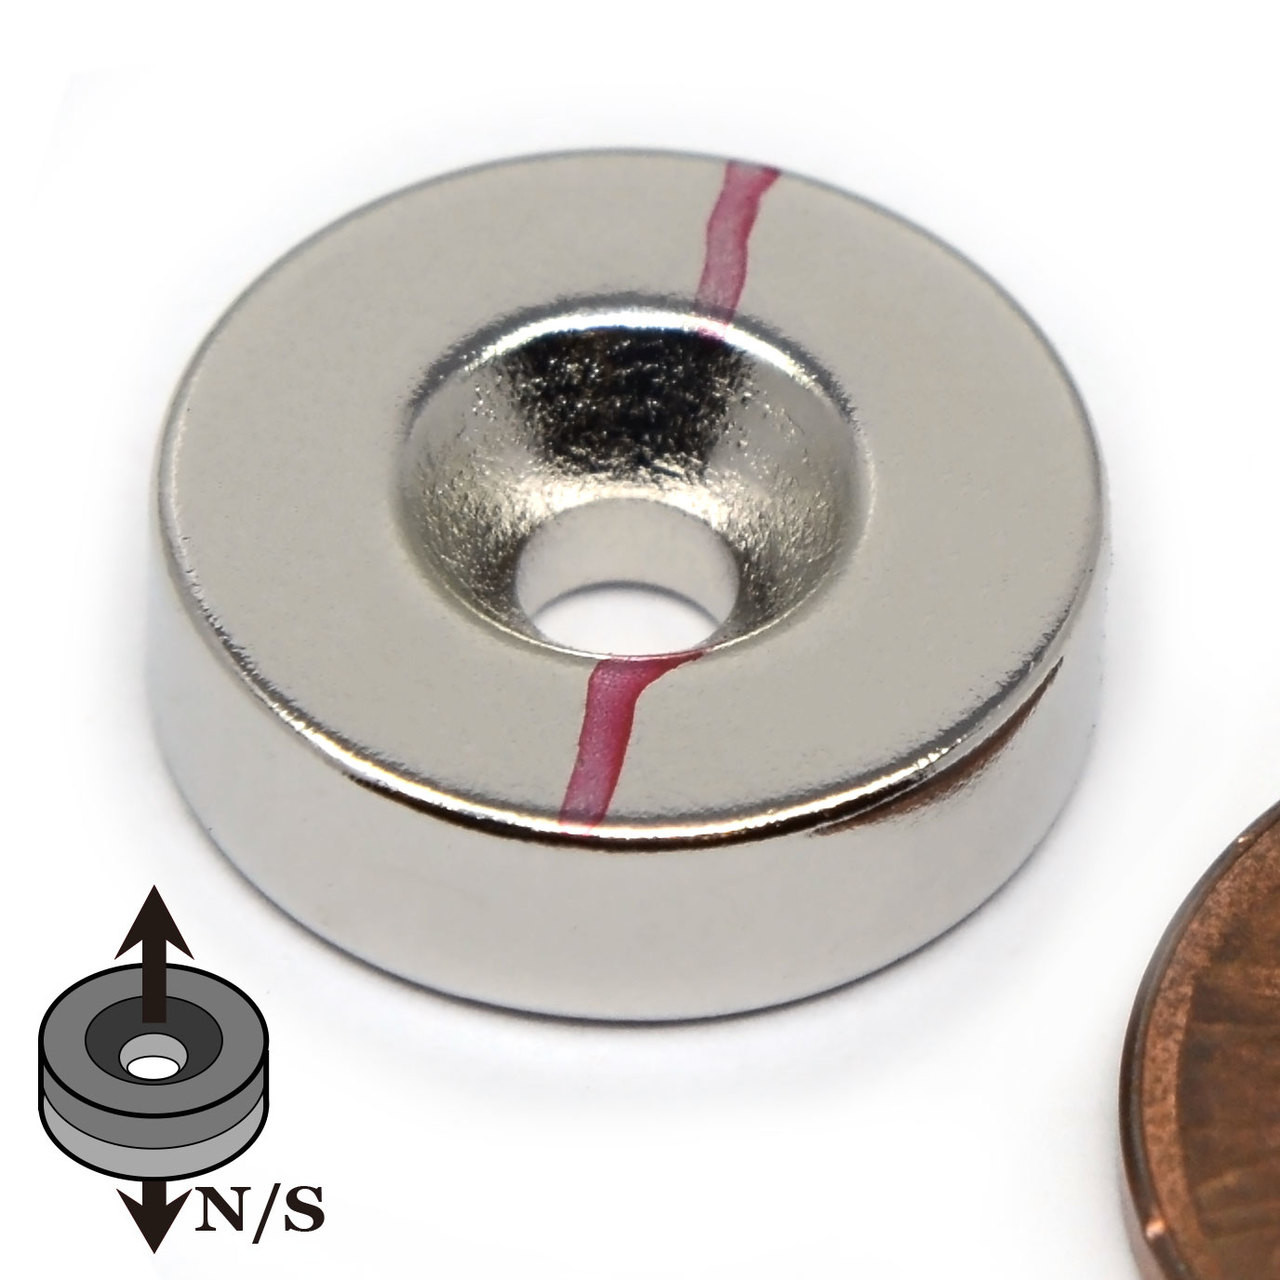 5/8 x 1/32 2 N52 Neodymium Cylindrical inch Cylinder/Disc Magnets.